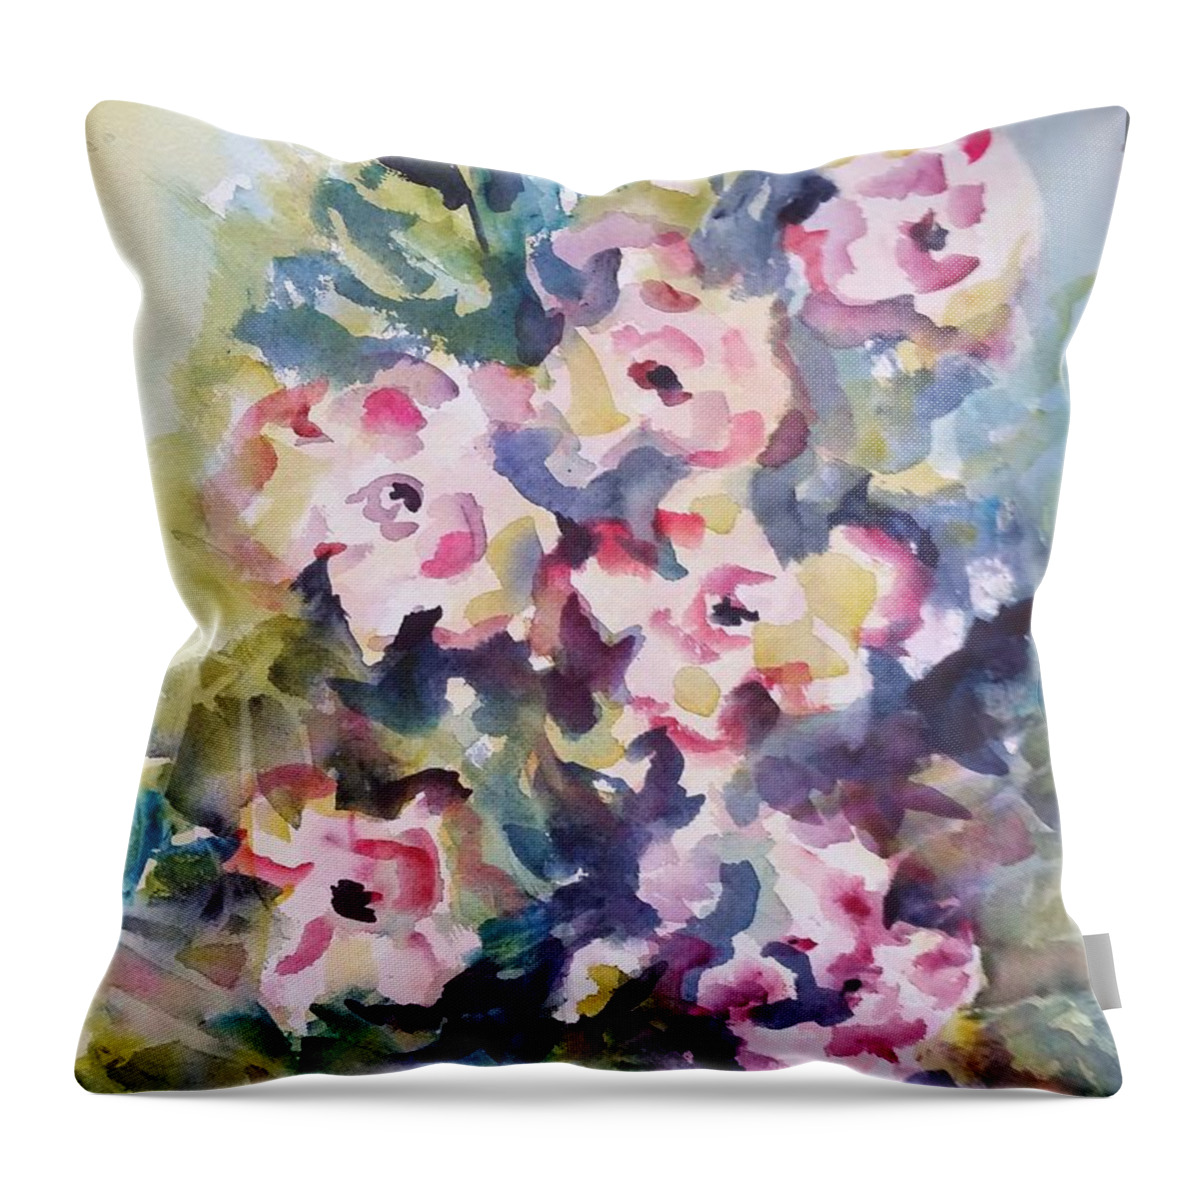 Flowers Throw Pillow featuring the painting Floral Rhythm by Kim Shuckhart Gunns